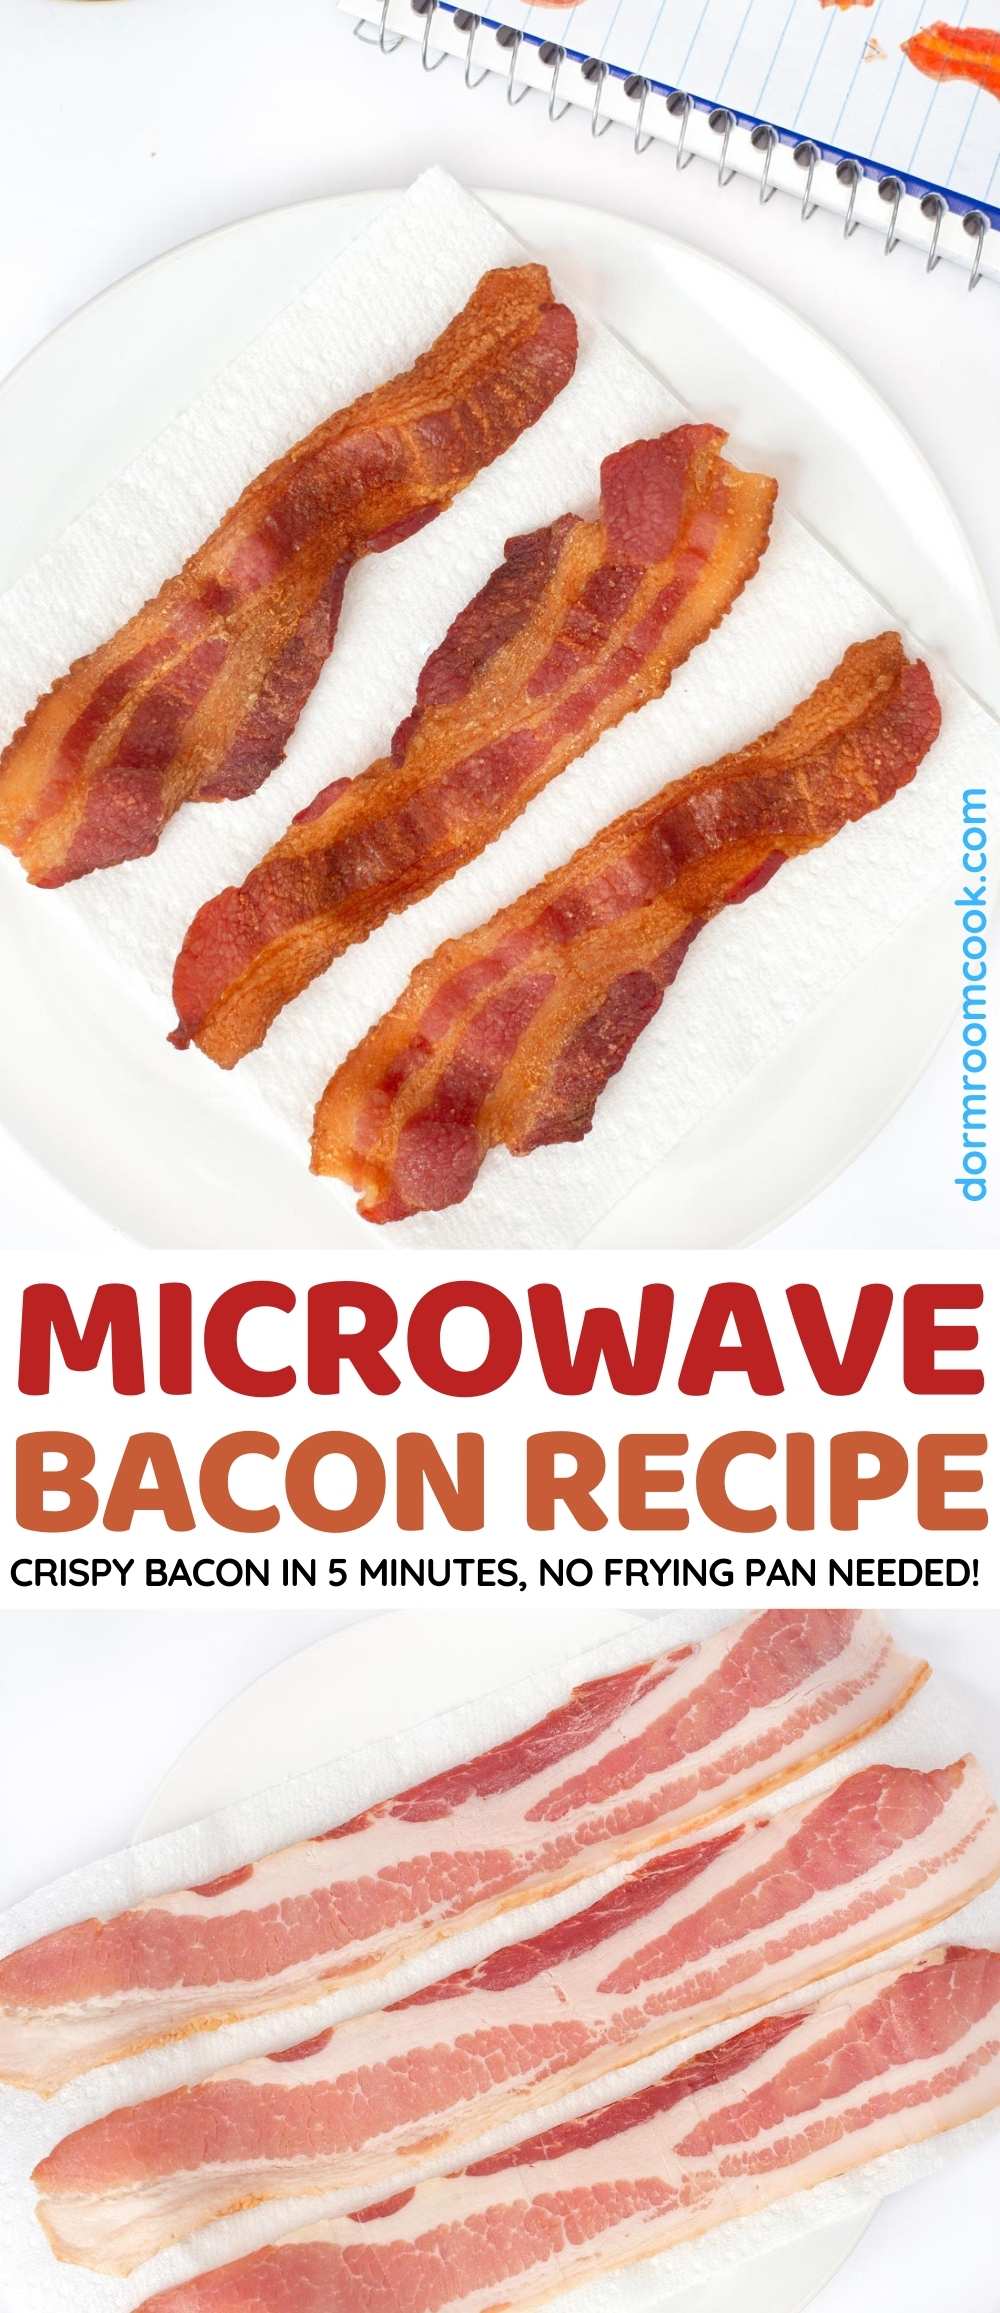 Microwaving Bacon